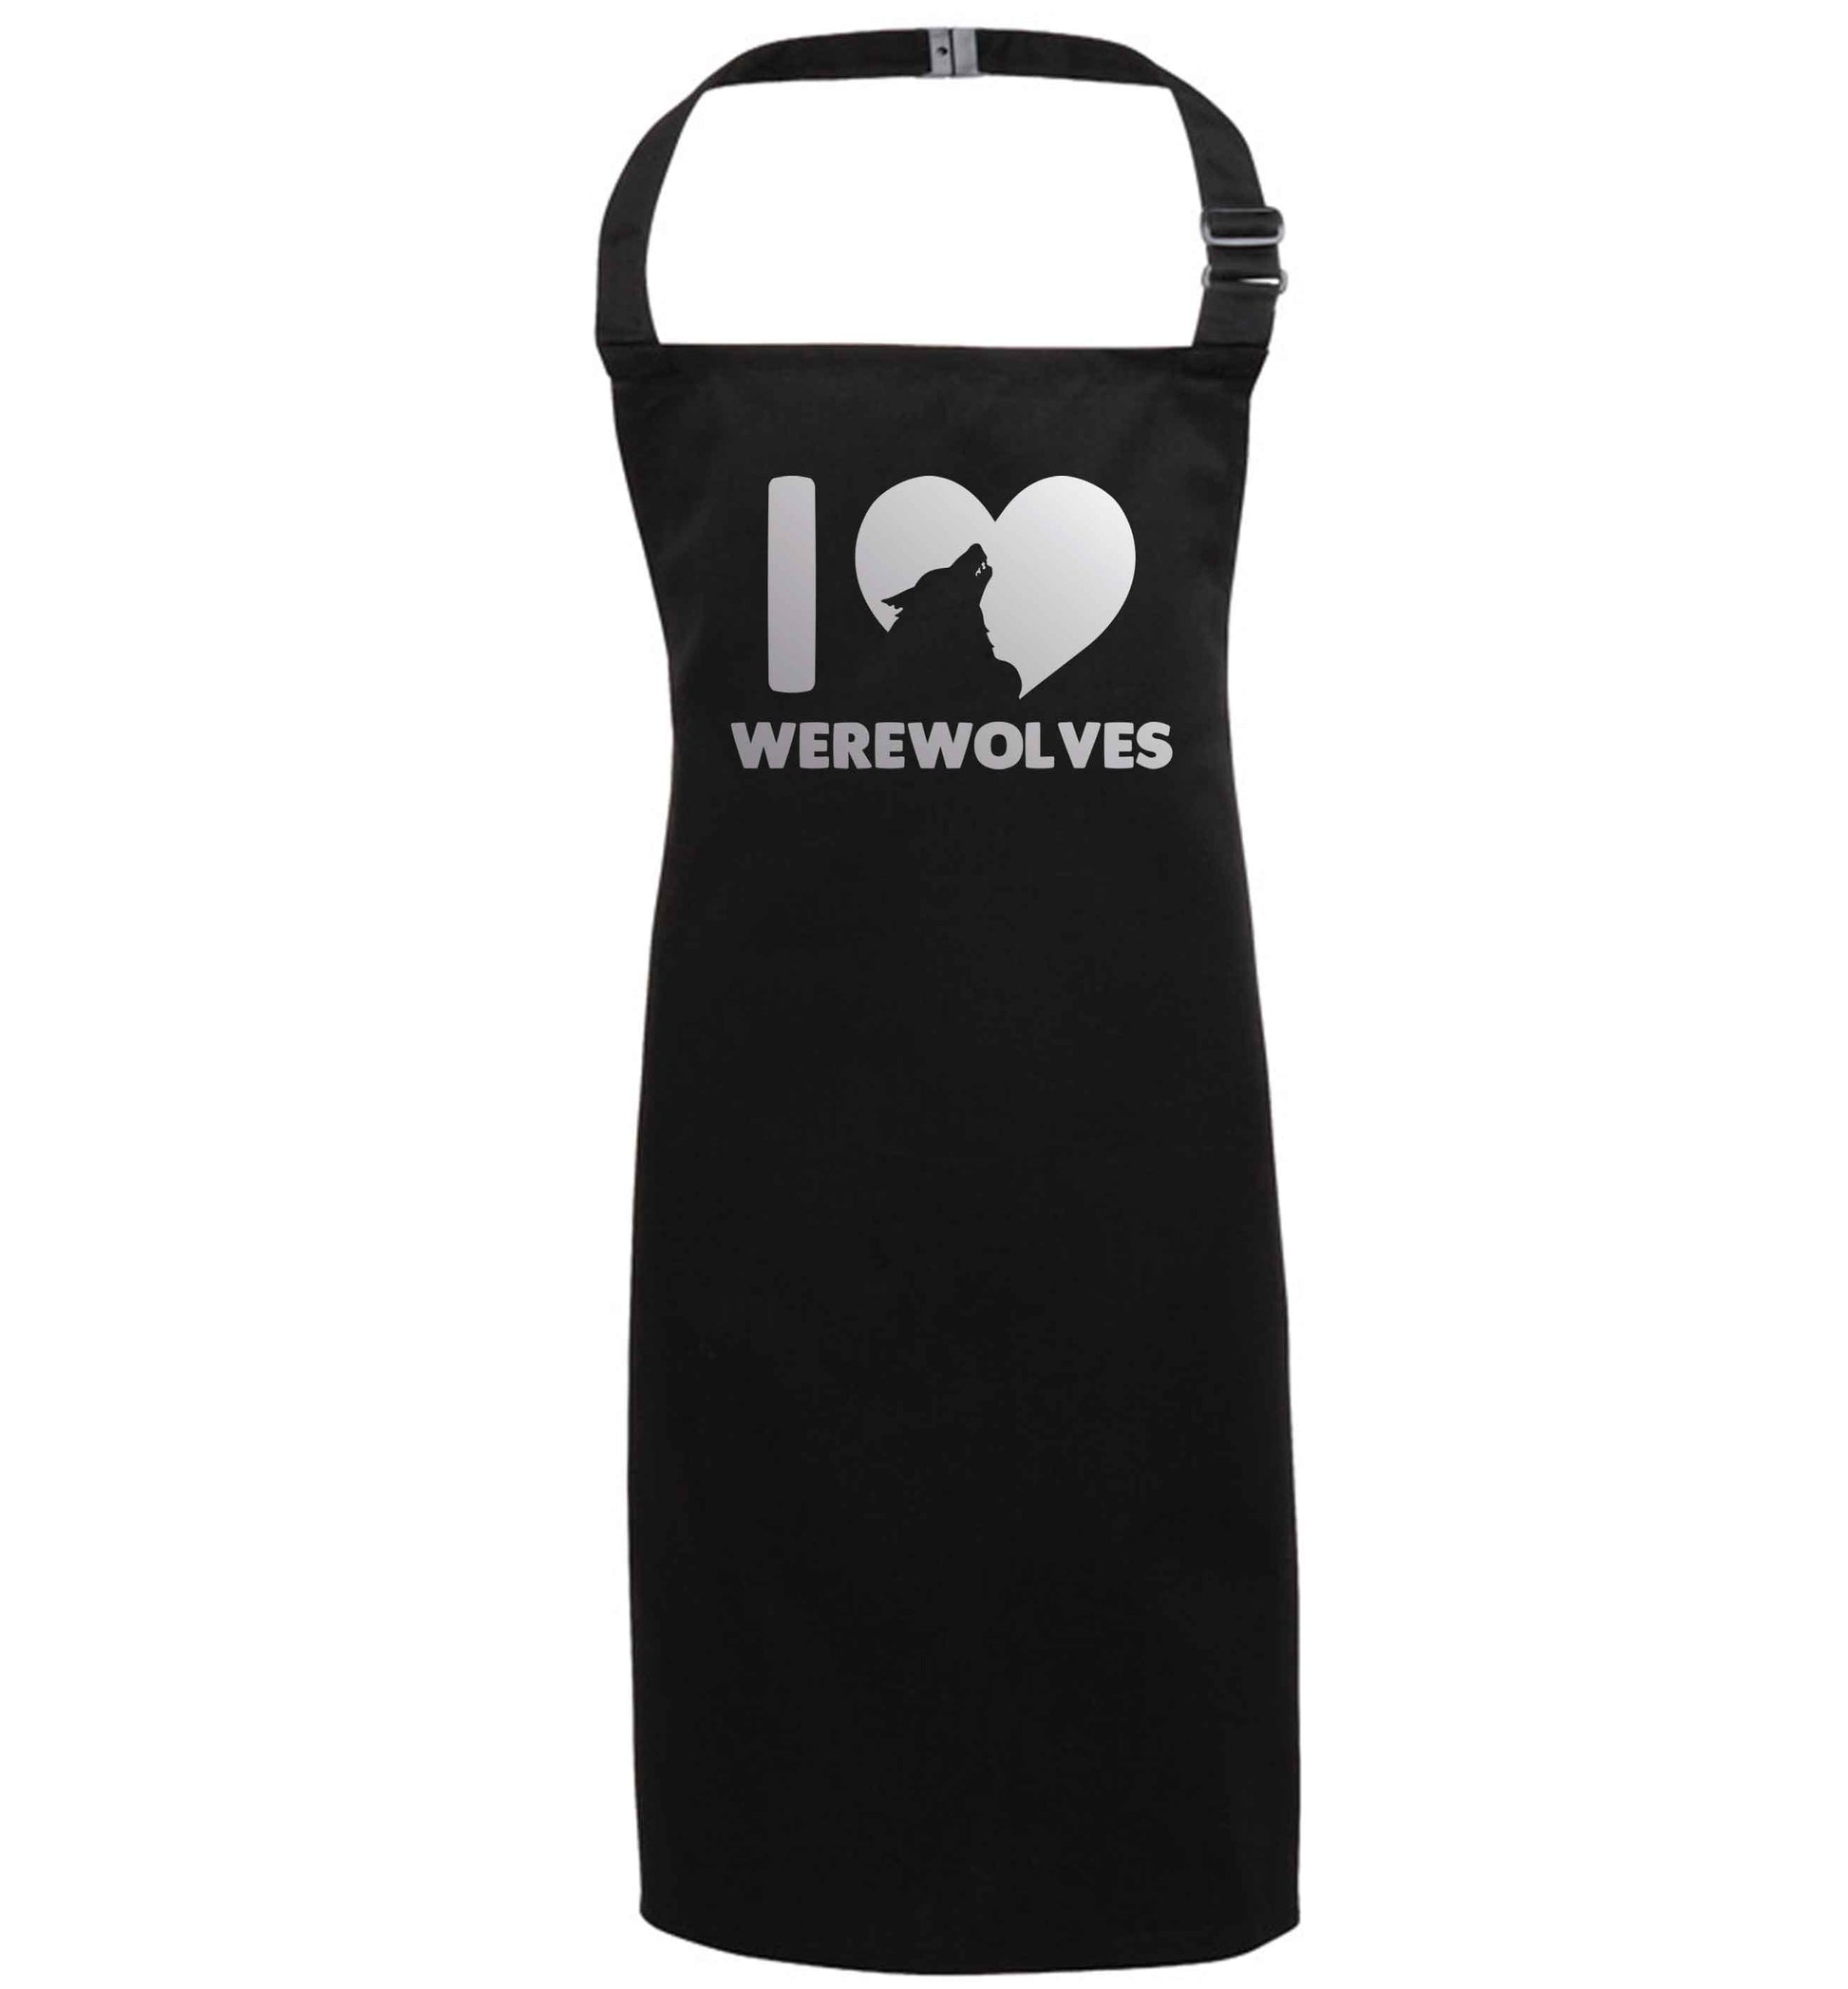 I love werewolves black apron 7-10 years